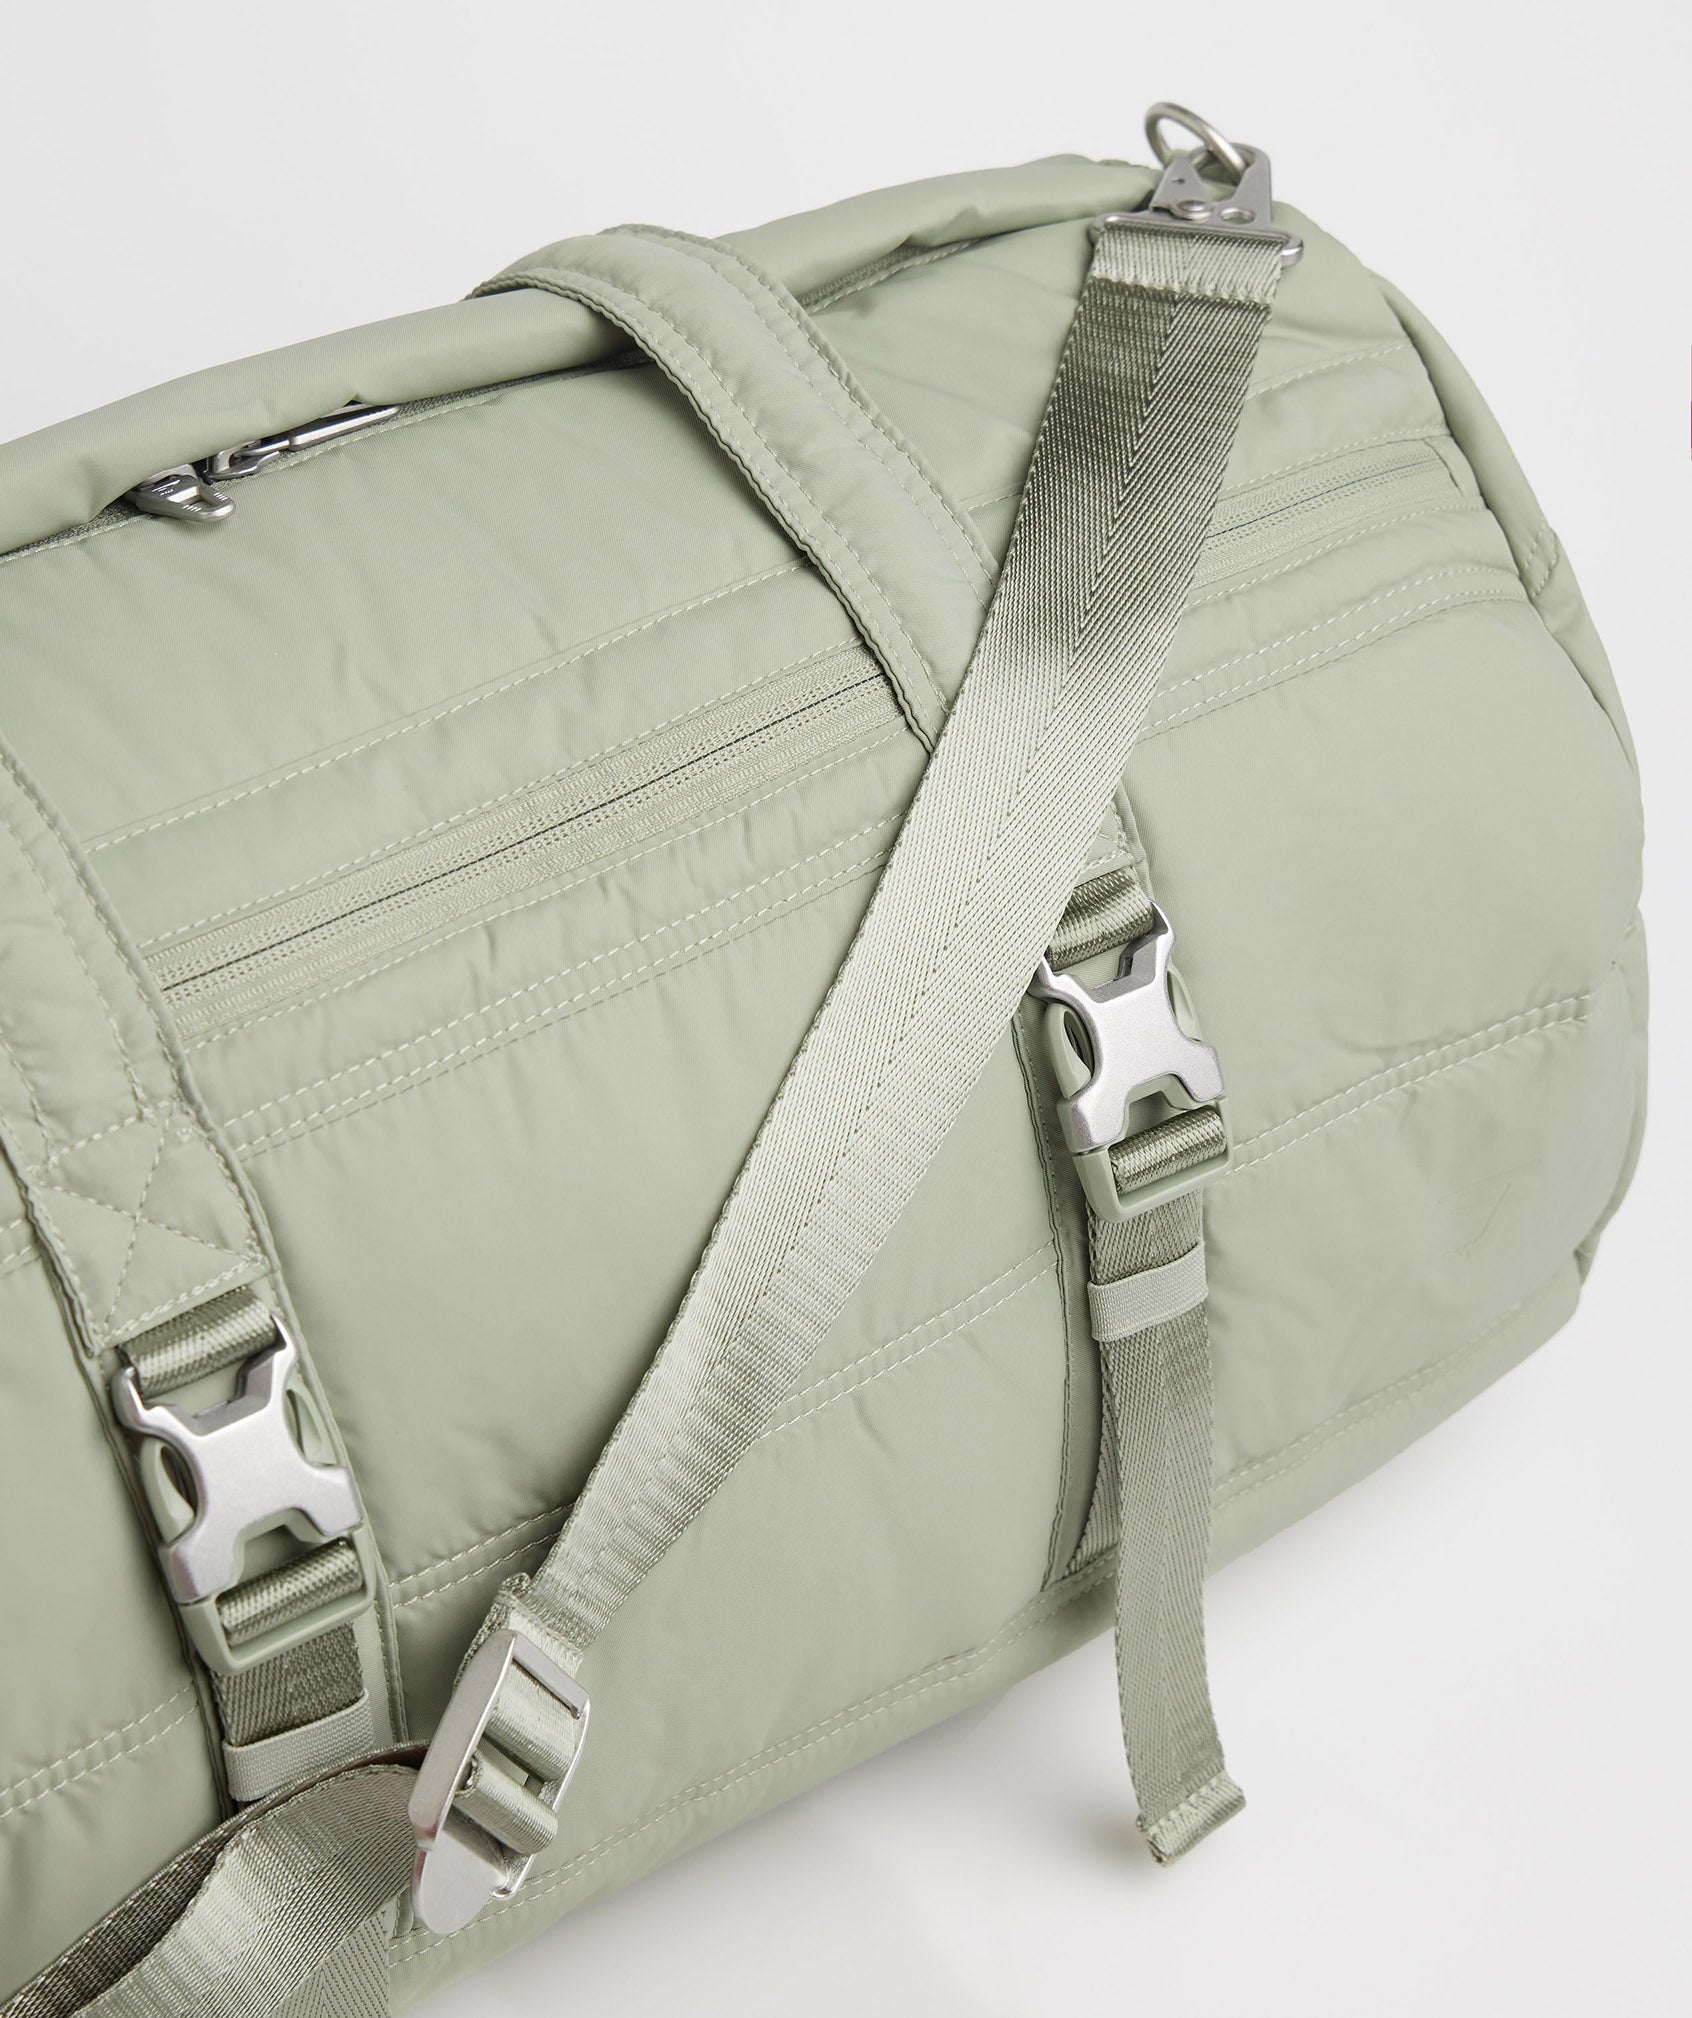 Premium Lifestyle Barrel Bag in Light Olive Green